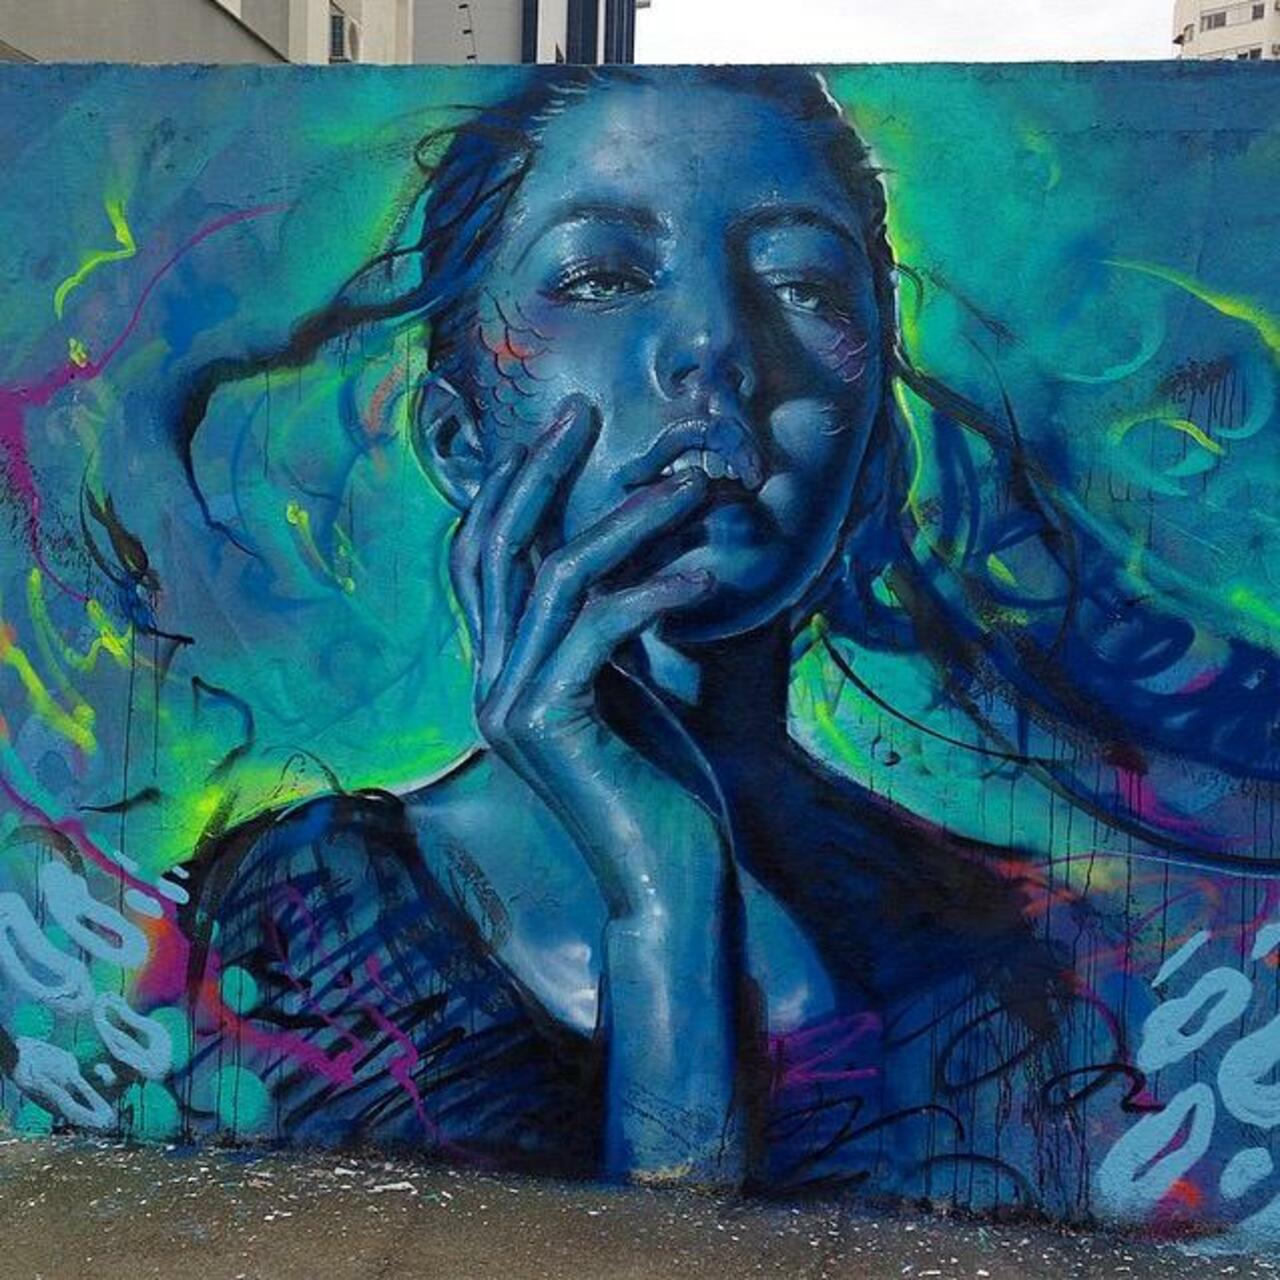 RT @jpaine: Thiago Valdi new Street Art piece titled 'Day Dreamer'

#art #mural #graffiti #streetart http://t.co/z6pKSEtYFb